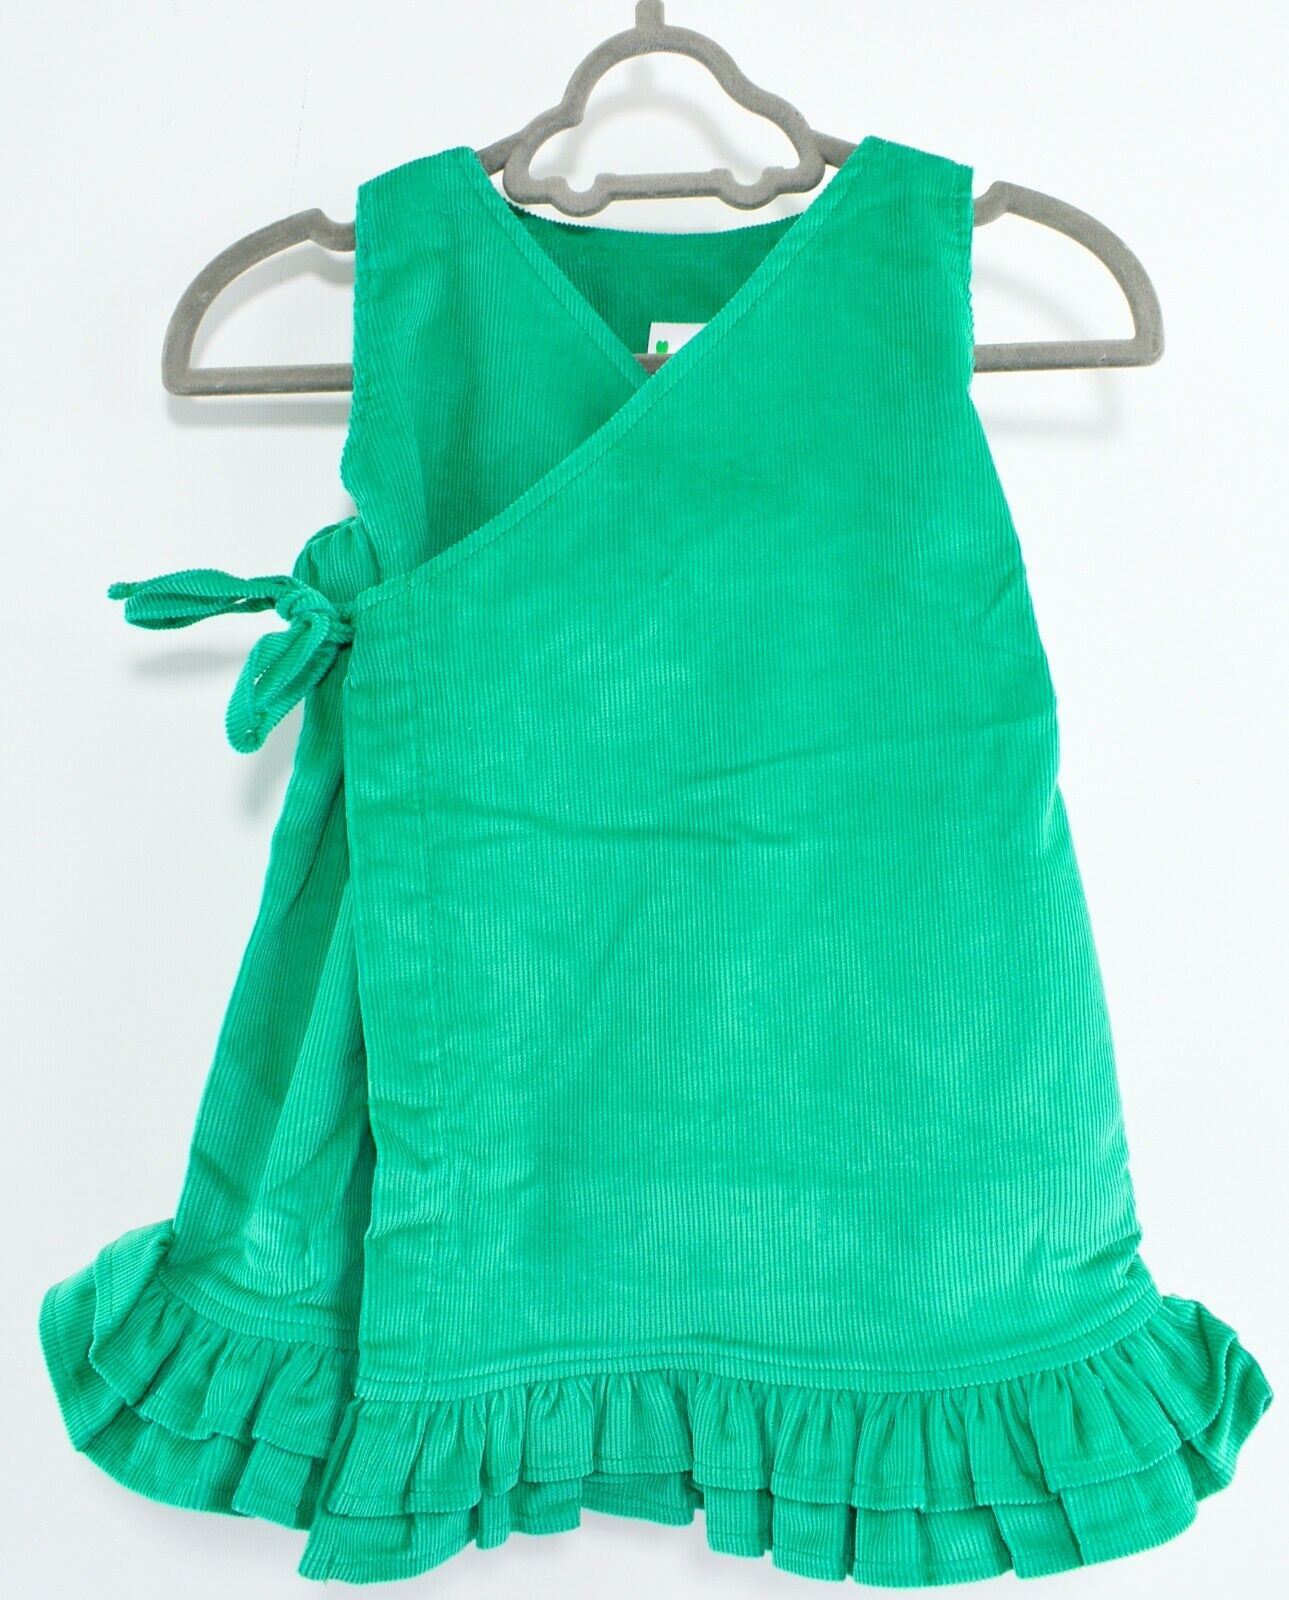 GREEN RABBIT Baby Girls' Fine Corduroy Dress, Green, MADE IN UK, size 0-6 Months